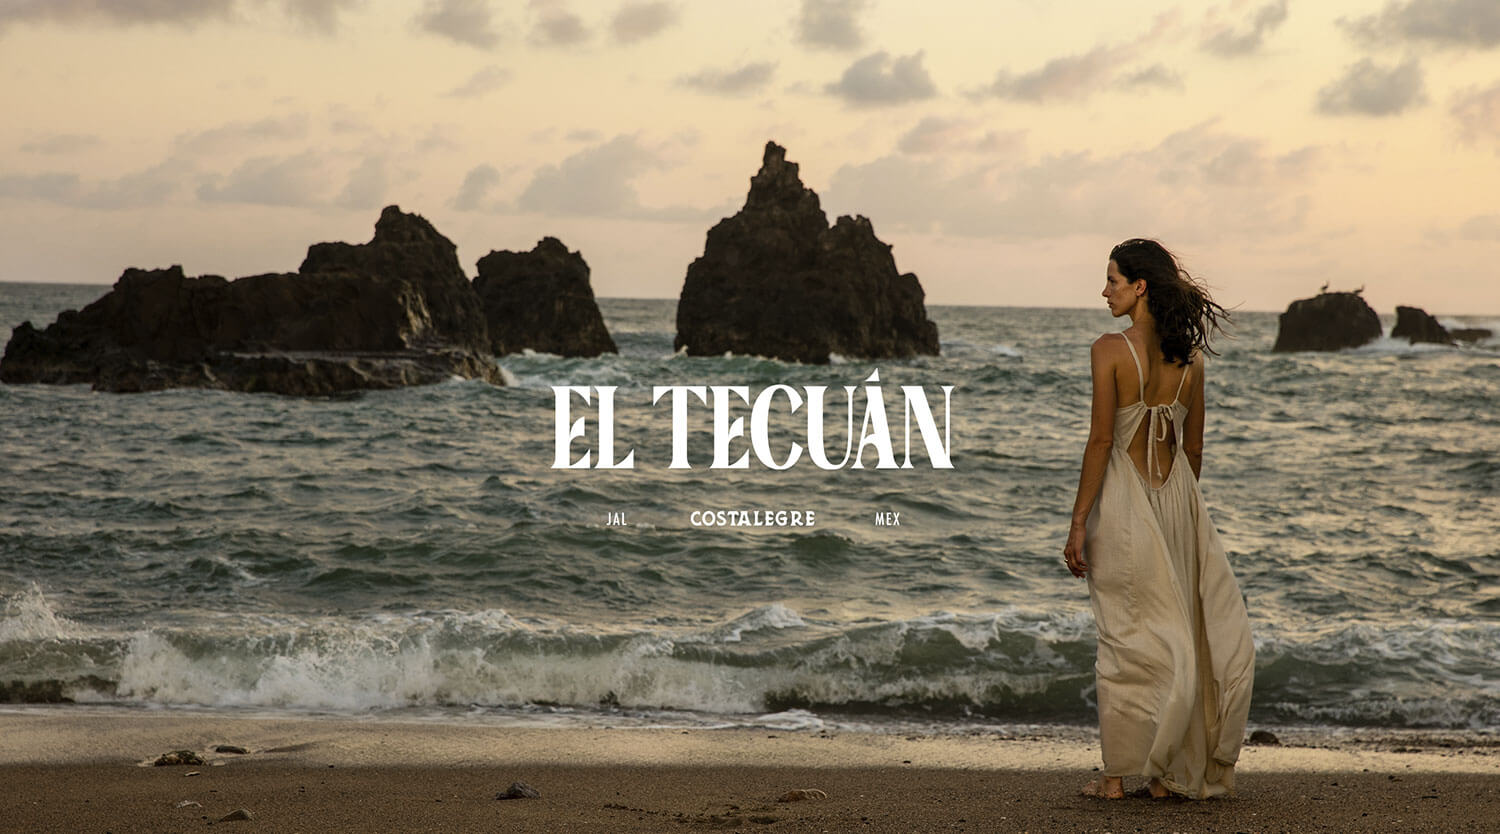 el tecuán brand scenic photography and logo